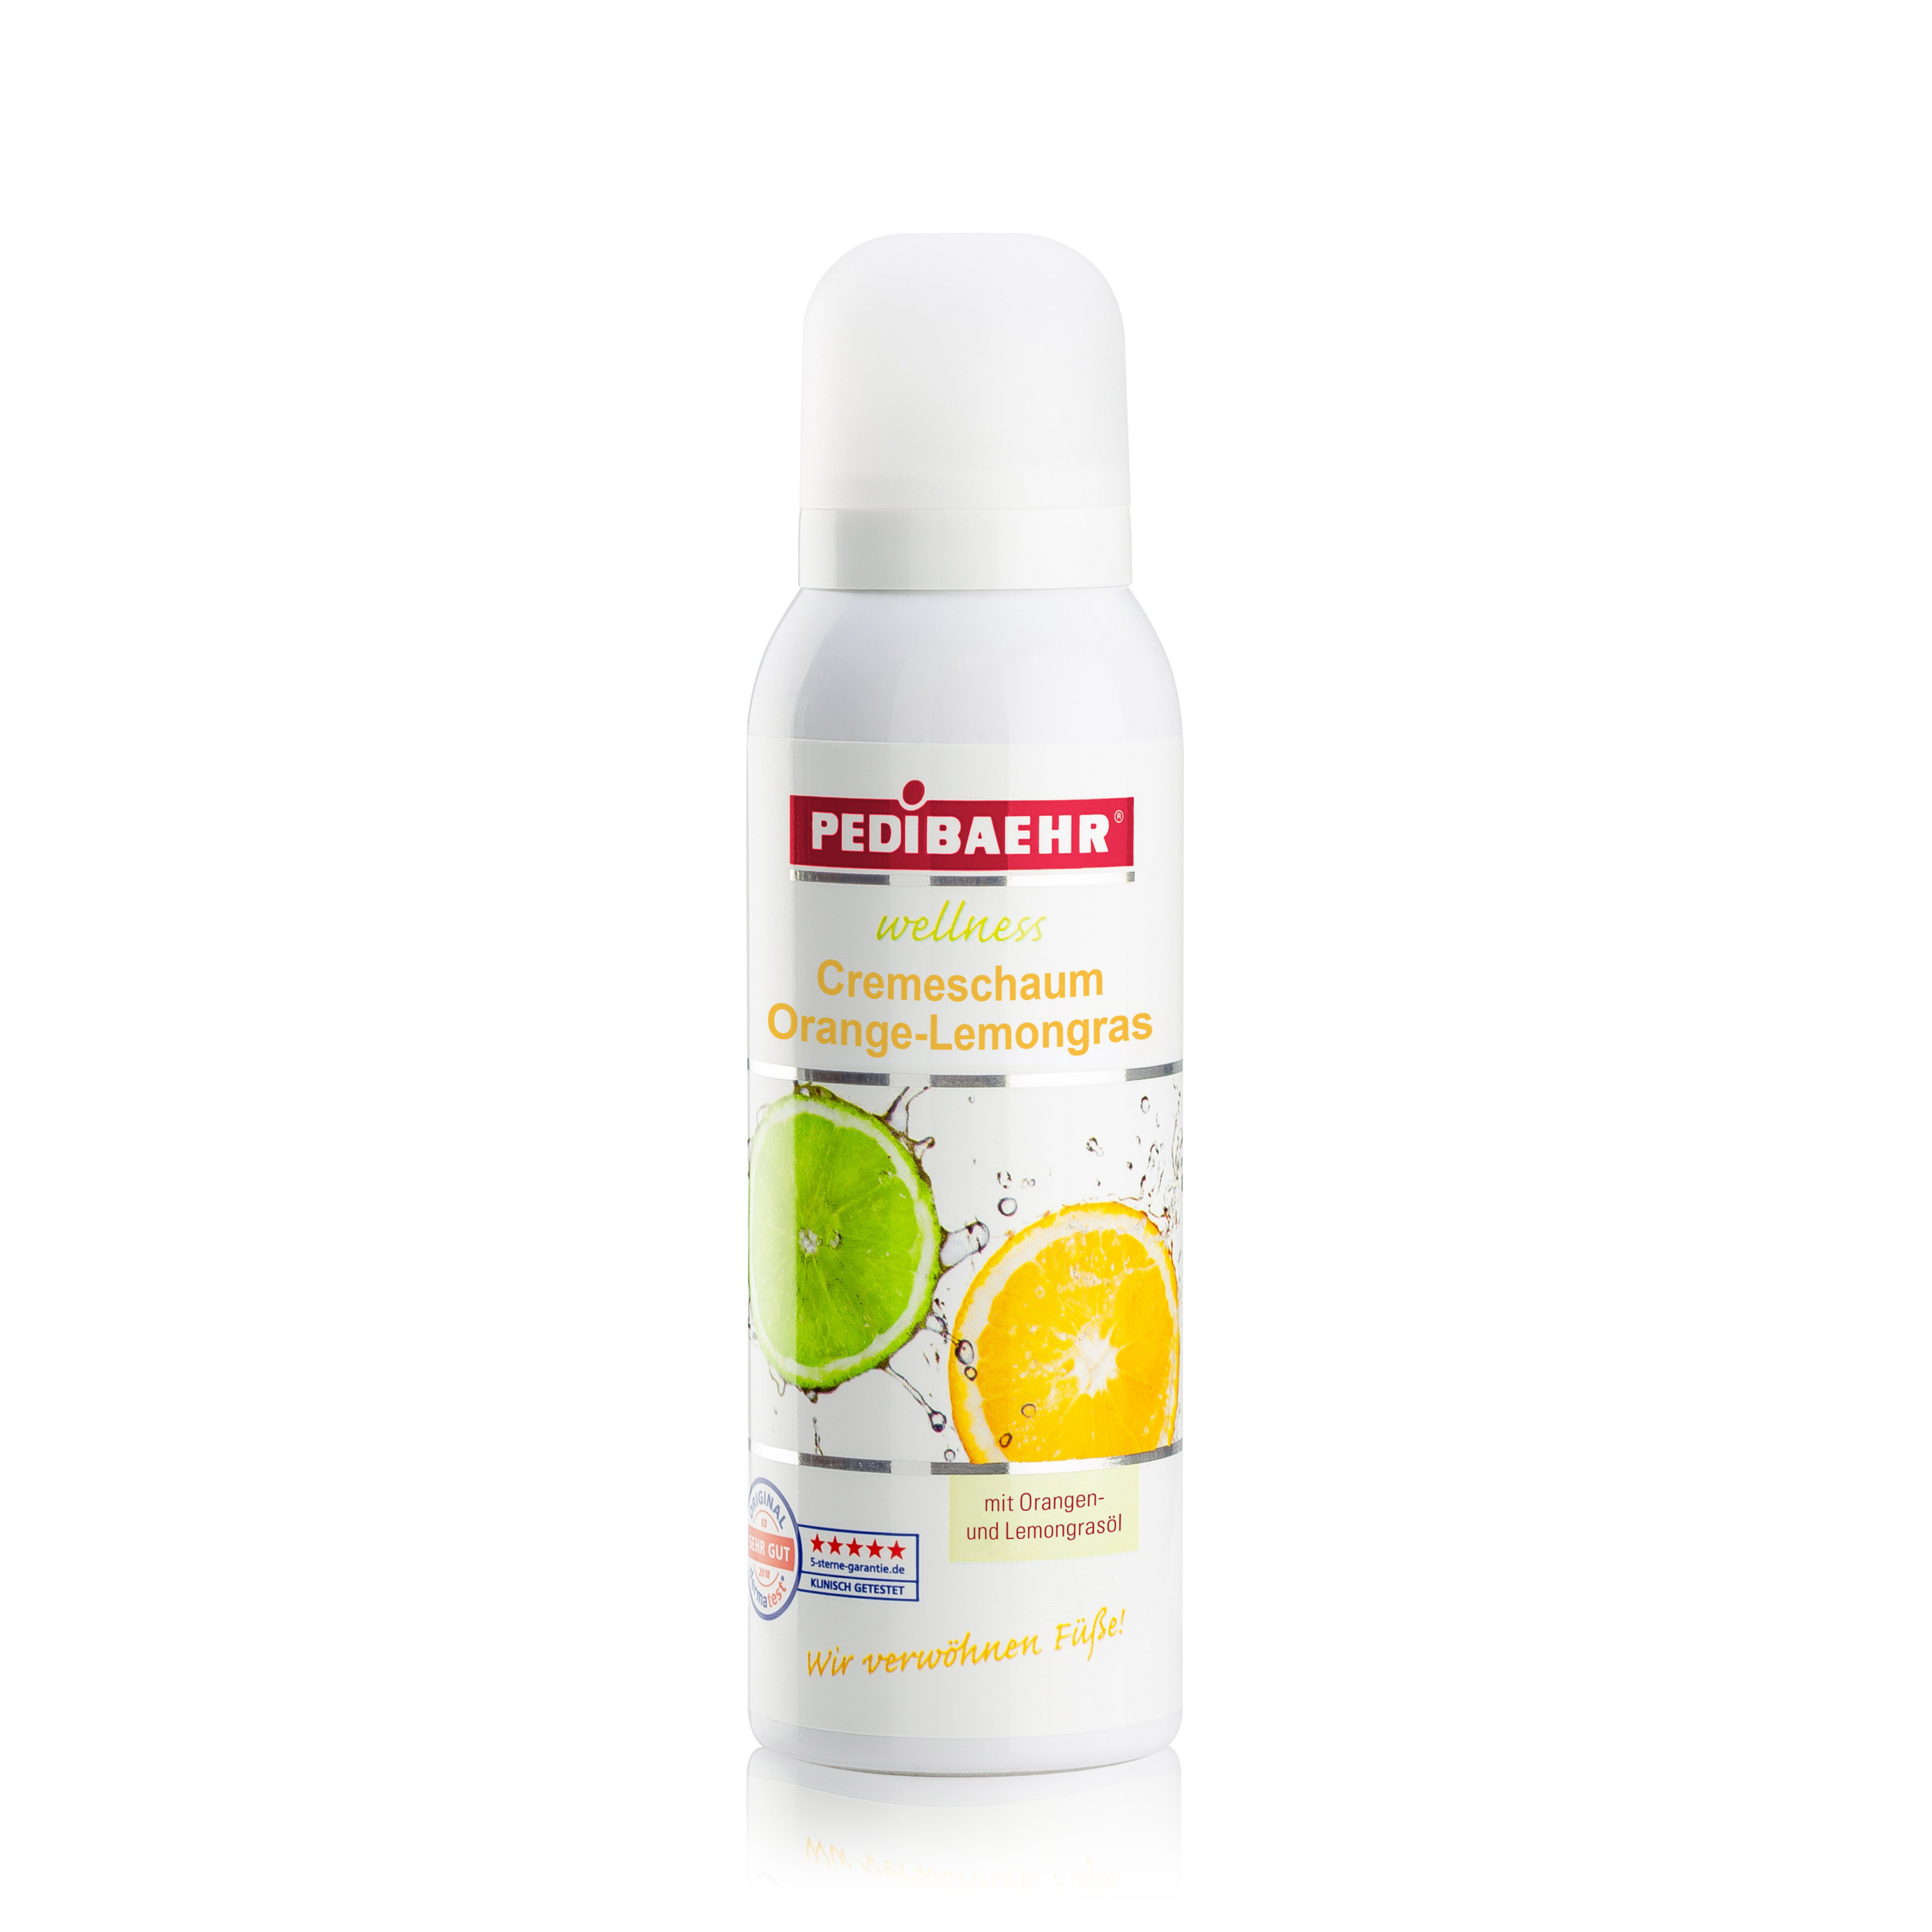 PEDIBAEHR Cremeschaum Orange-Lemongras 125 ml